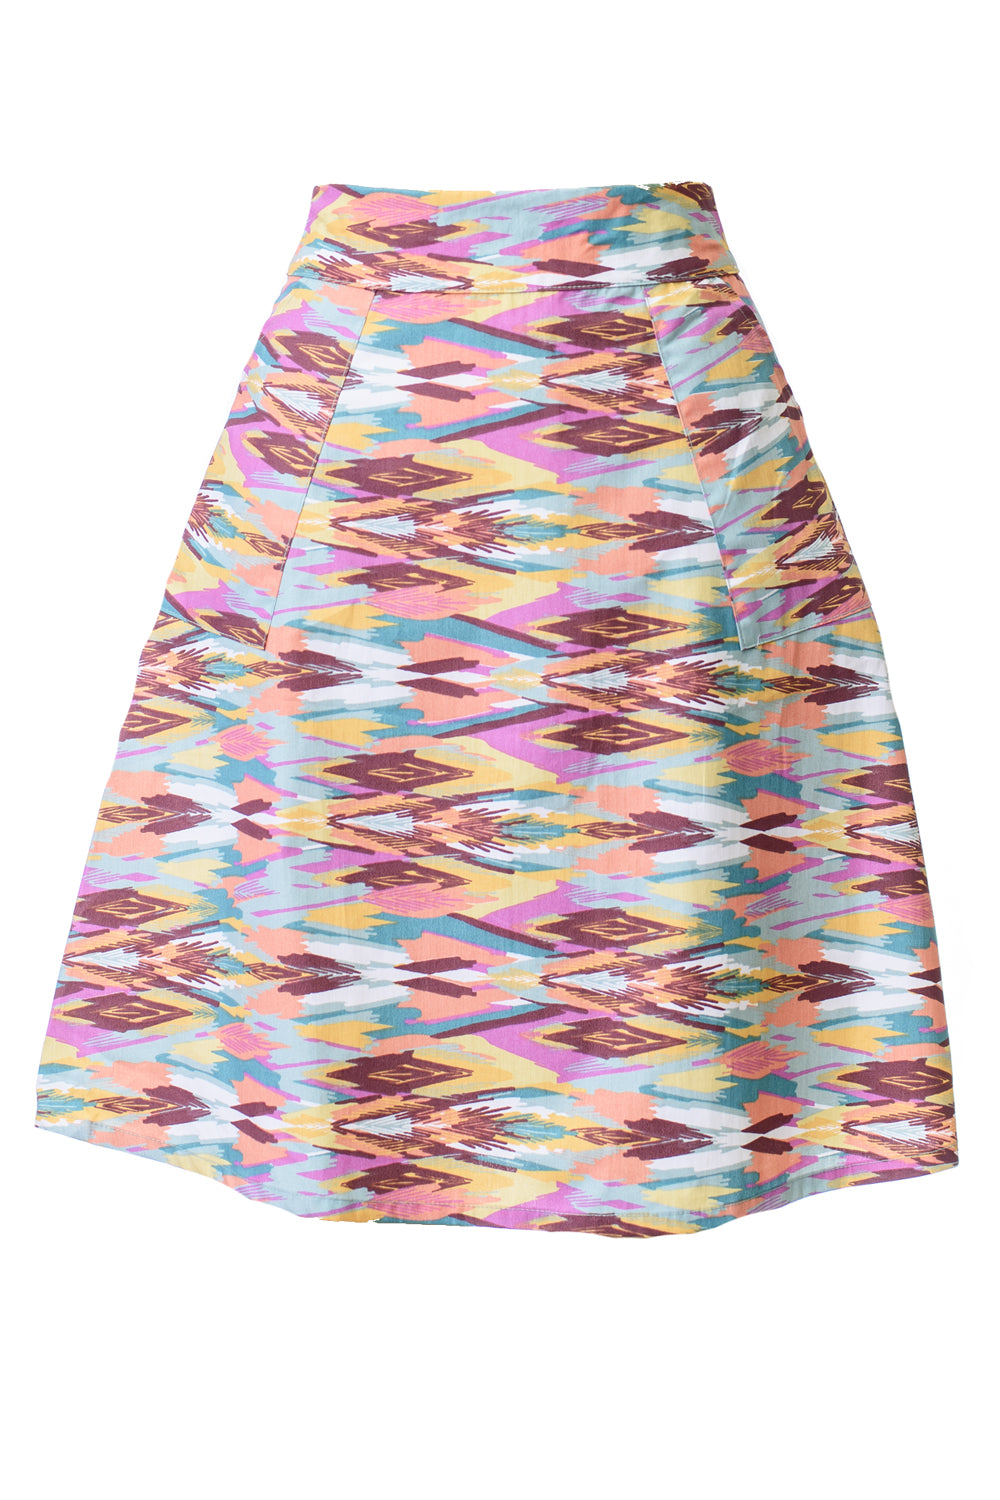 A-Line Woven Skirt in Southwest Sunset